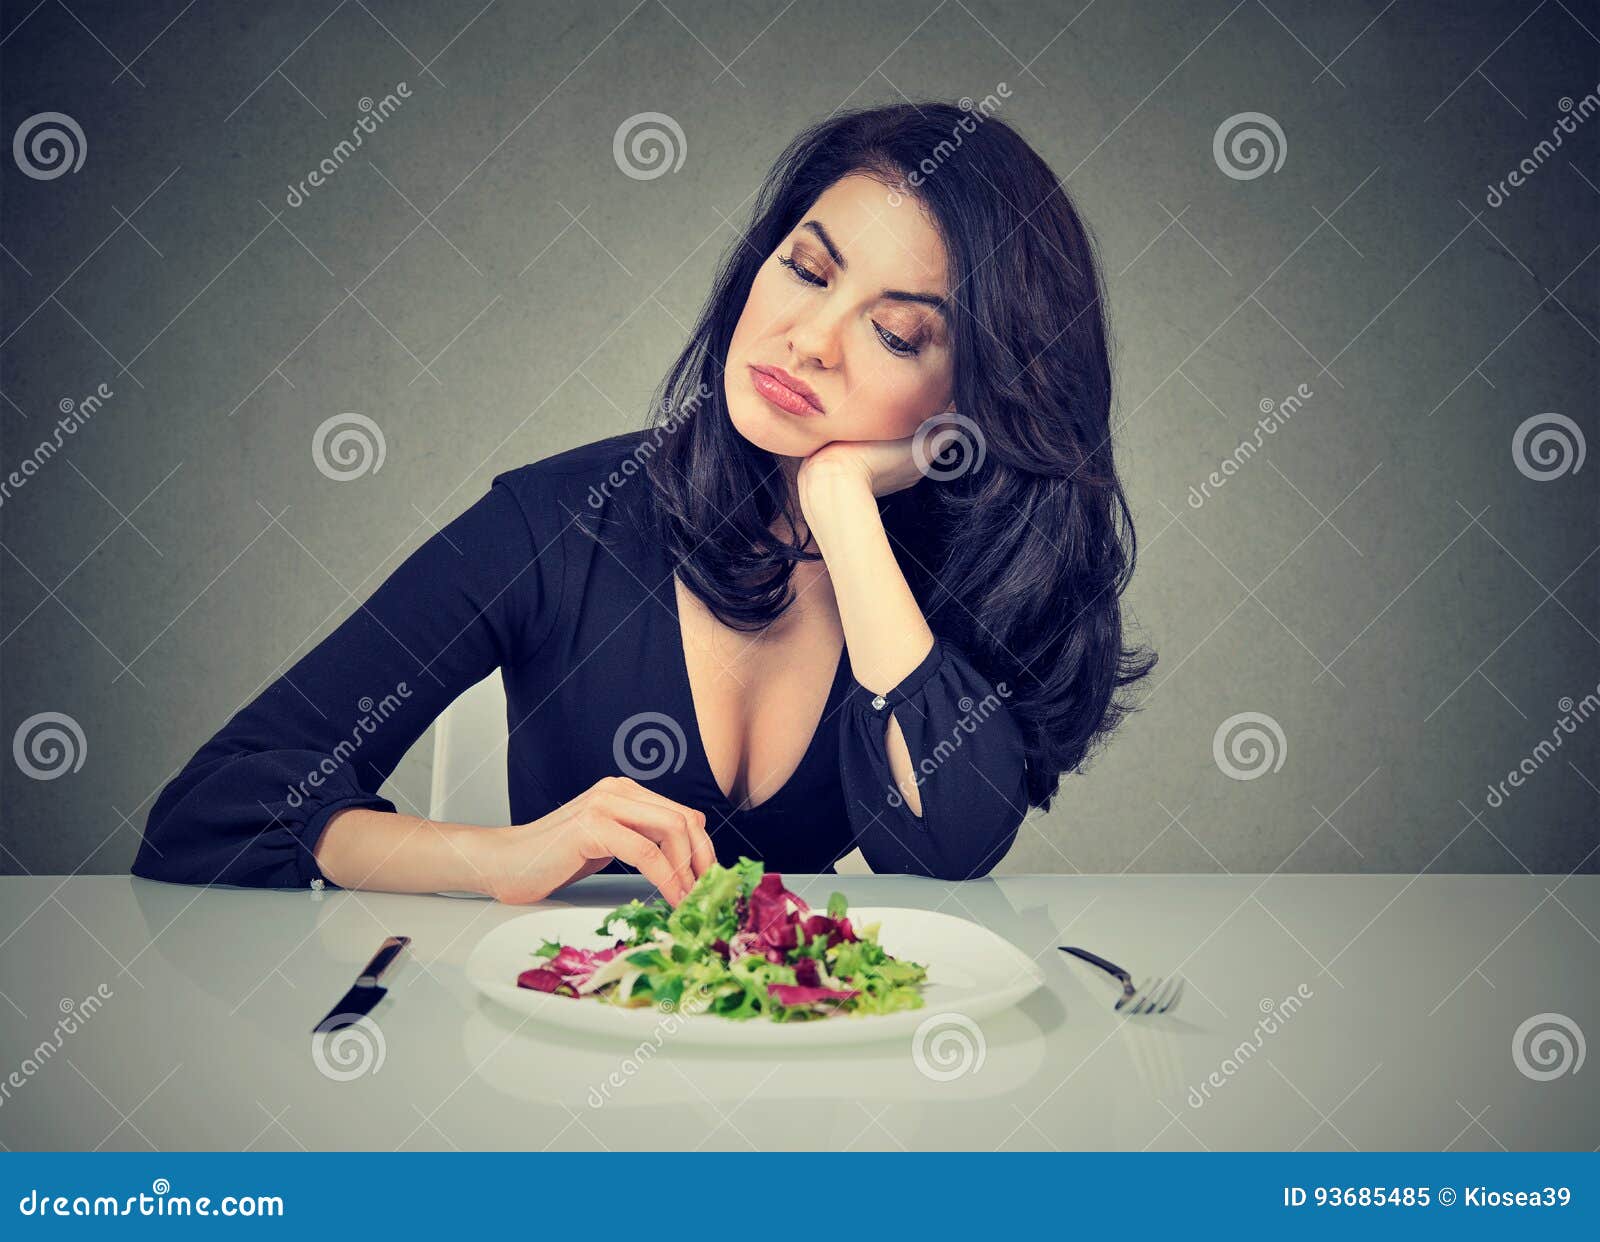 dieting habits changes. woman hates vegetarian diet